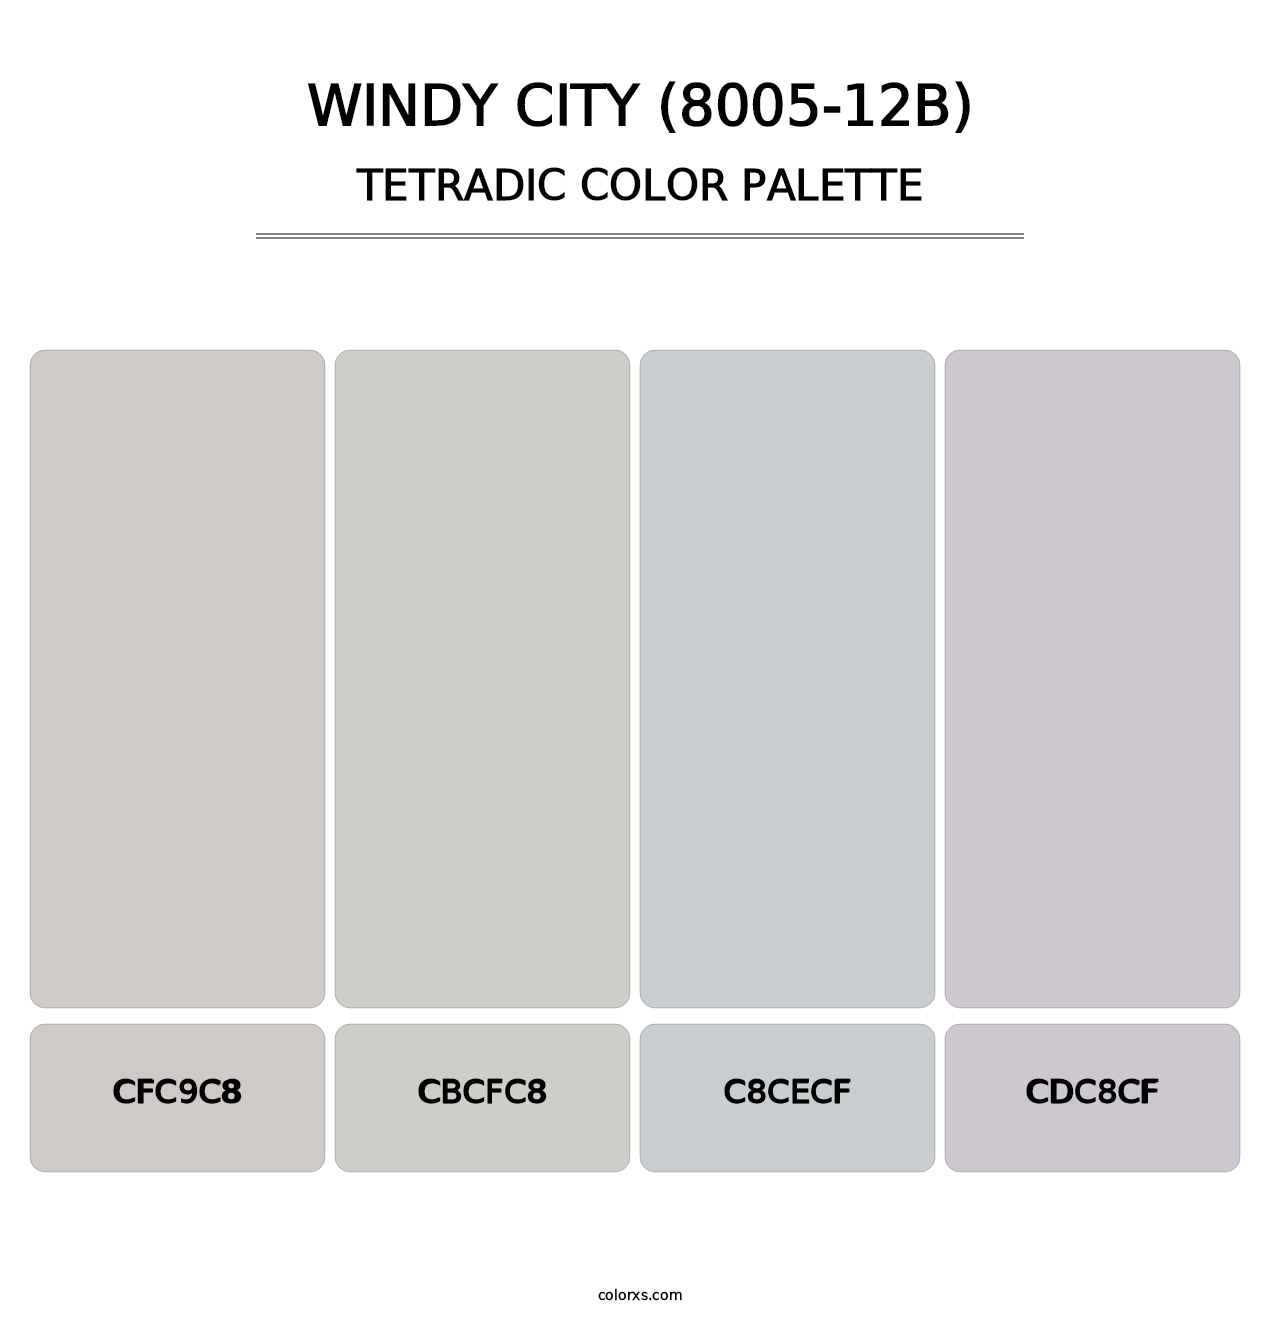 Windy City (8005-12B) - Tetradic Color Palette